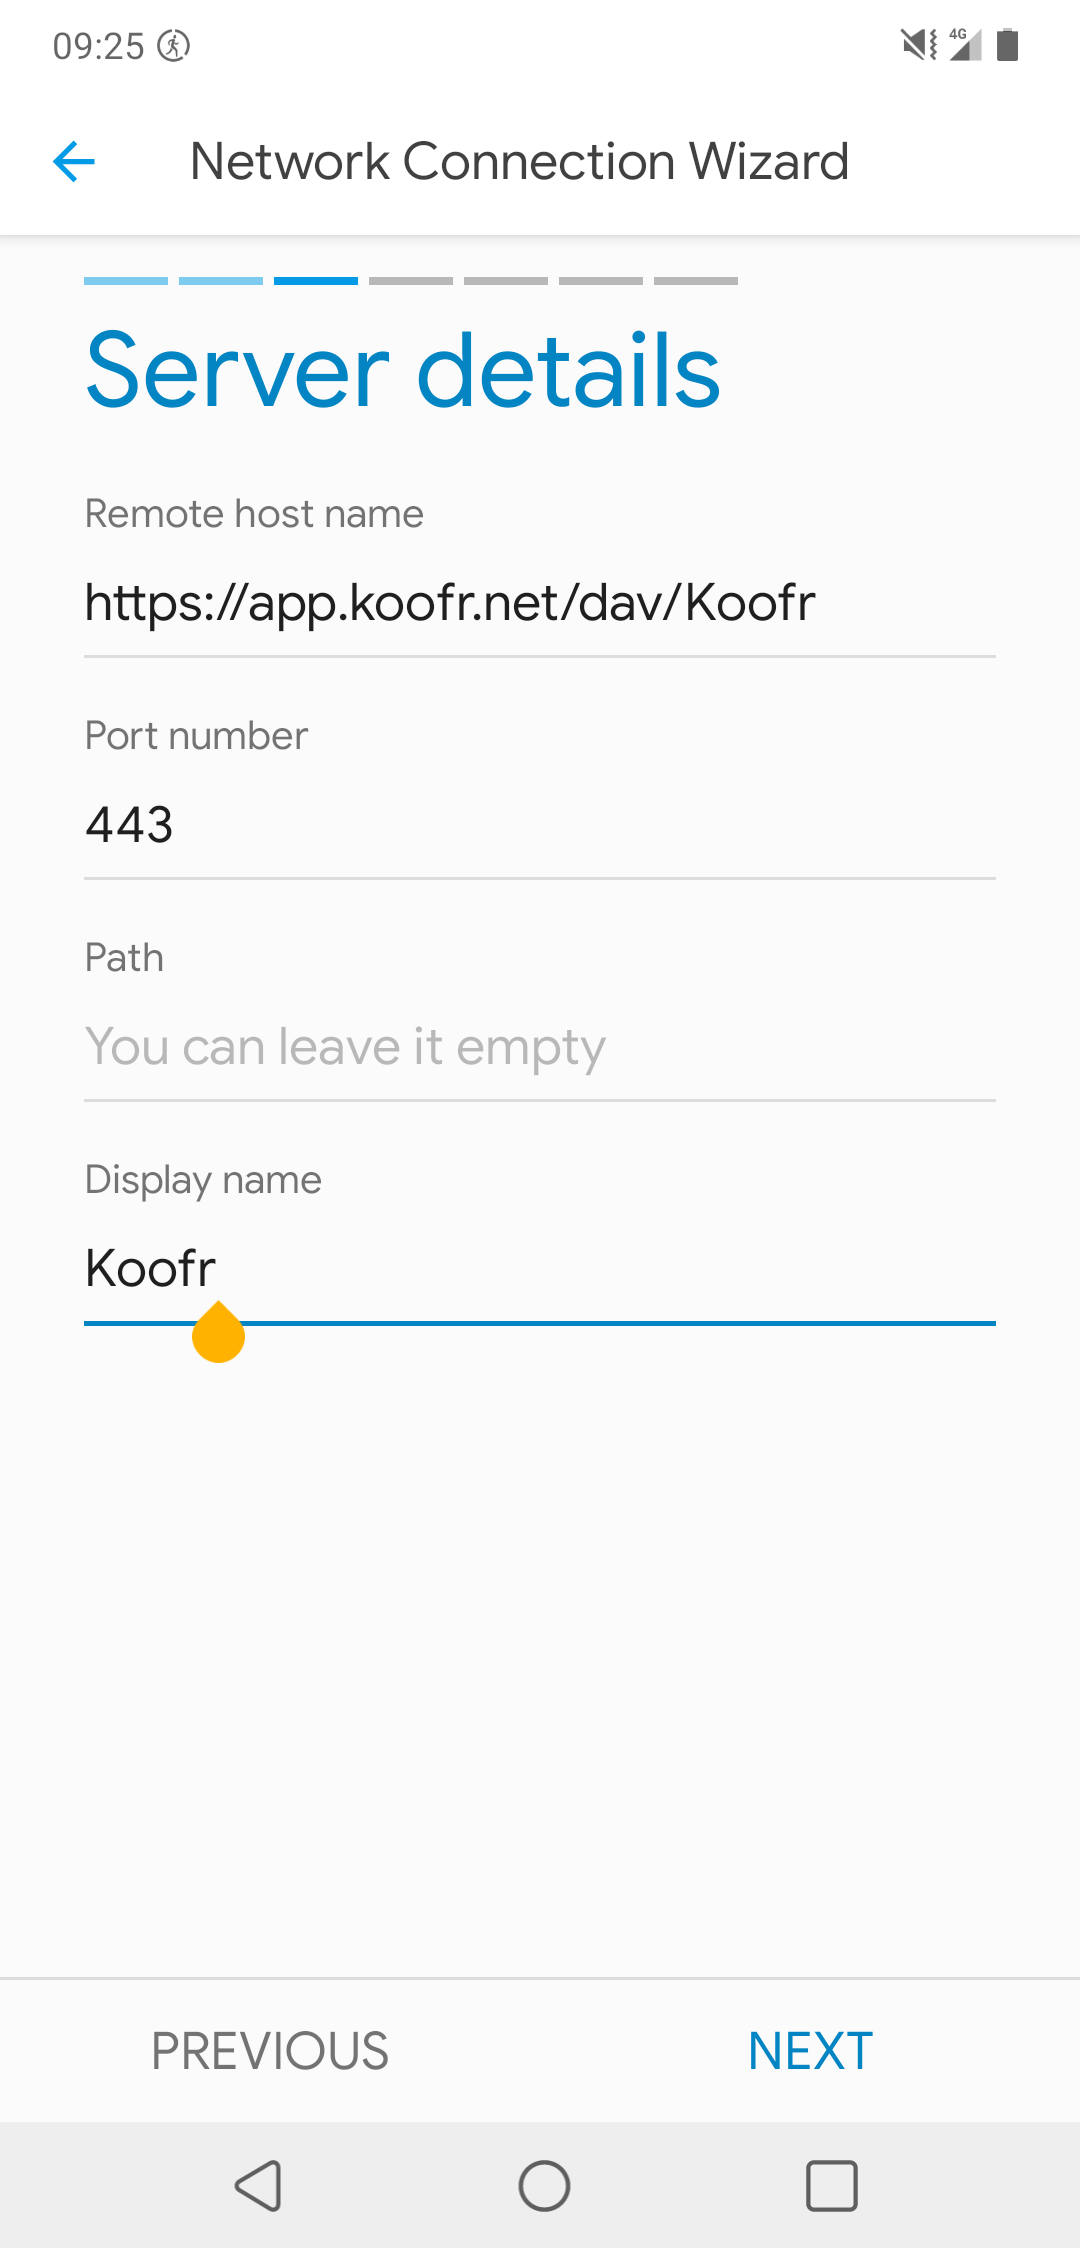 Fill in the server details, including Koofr's WebDAV address.